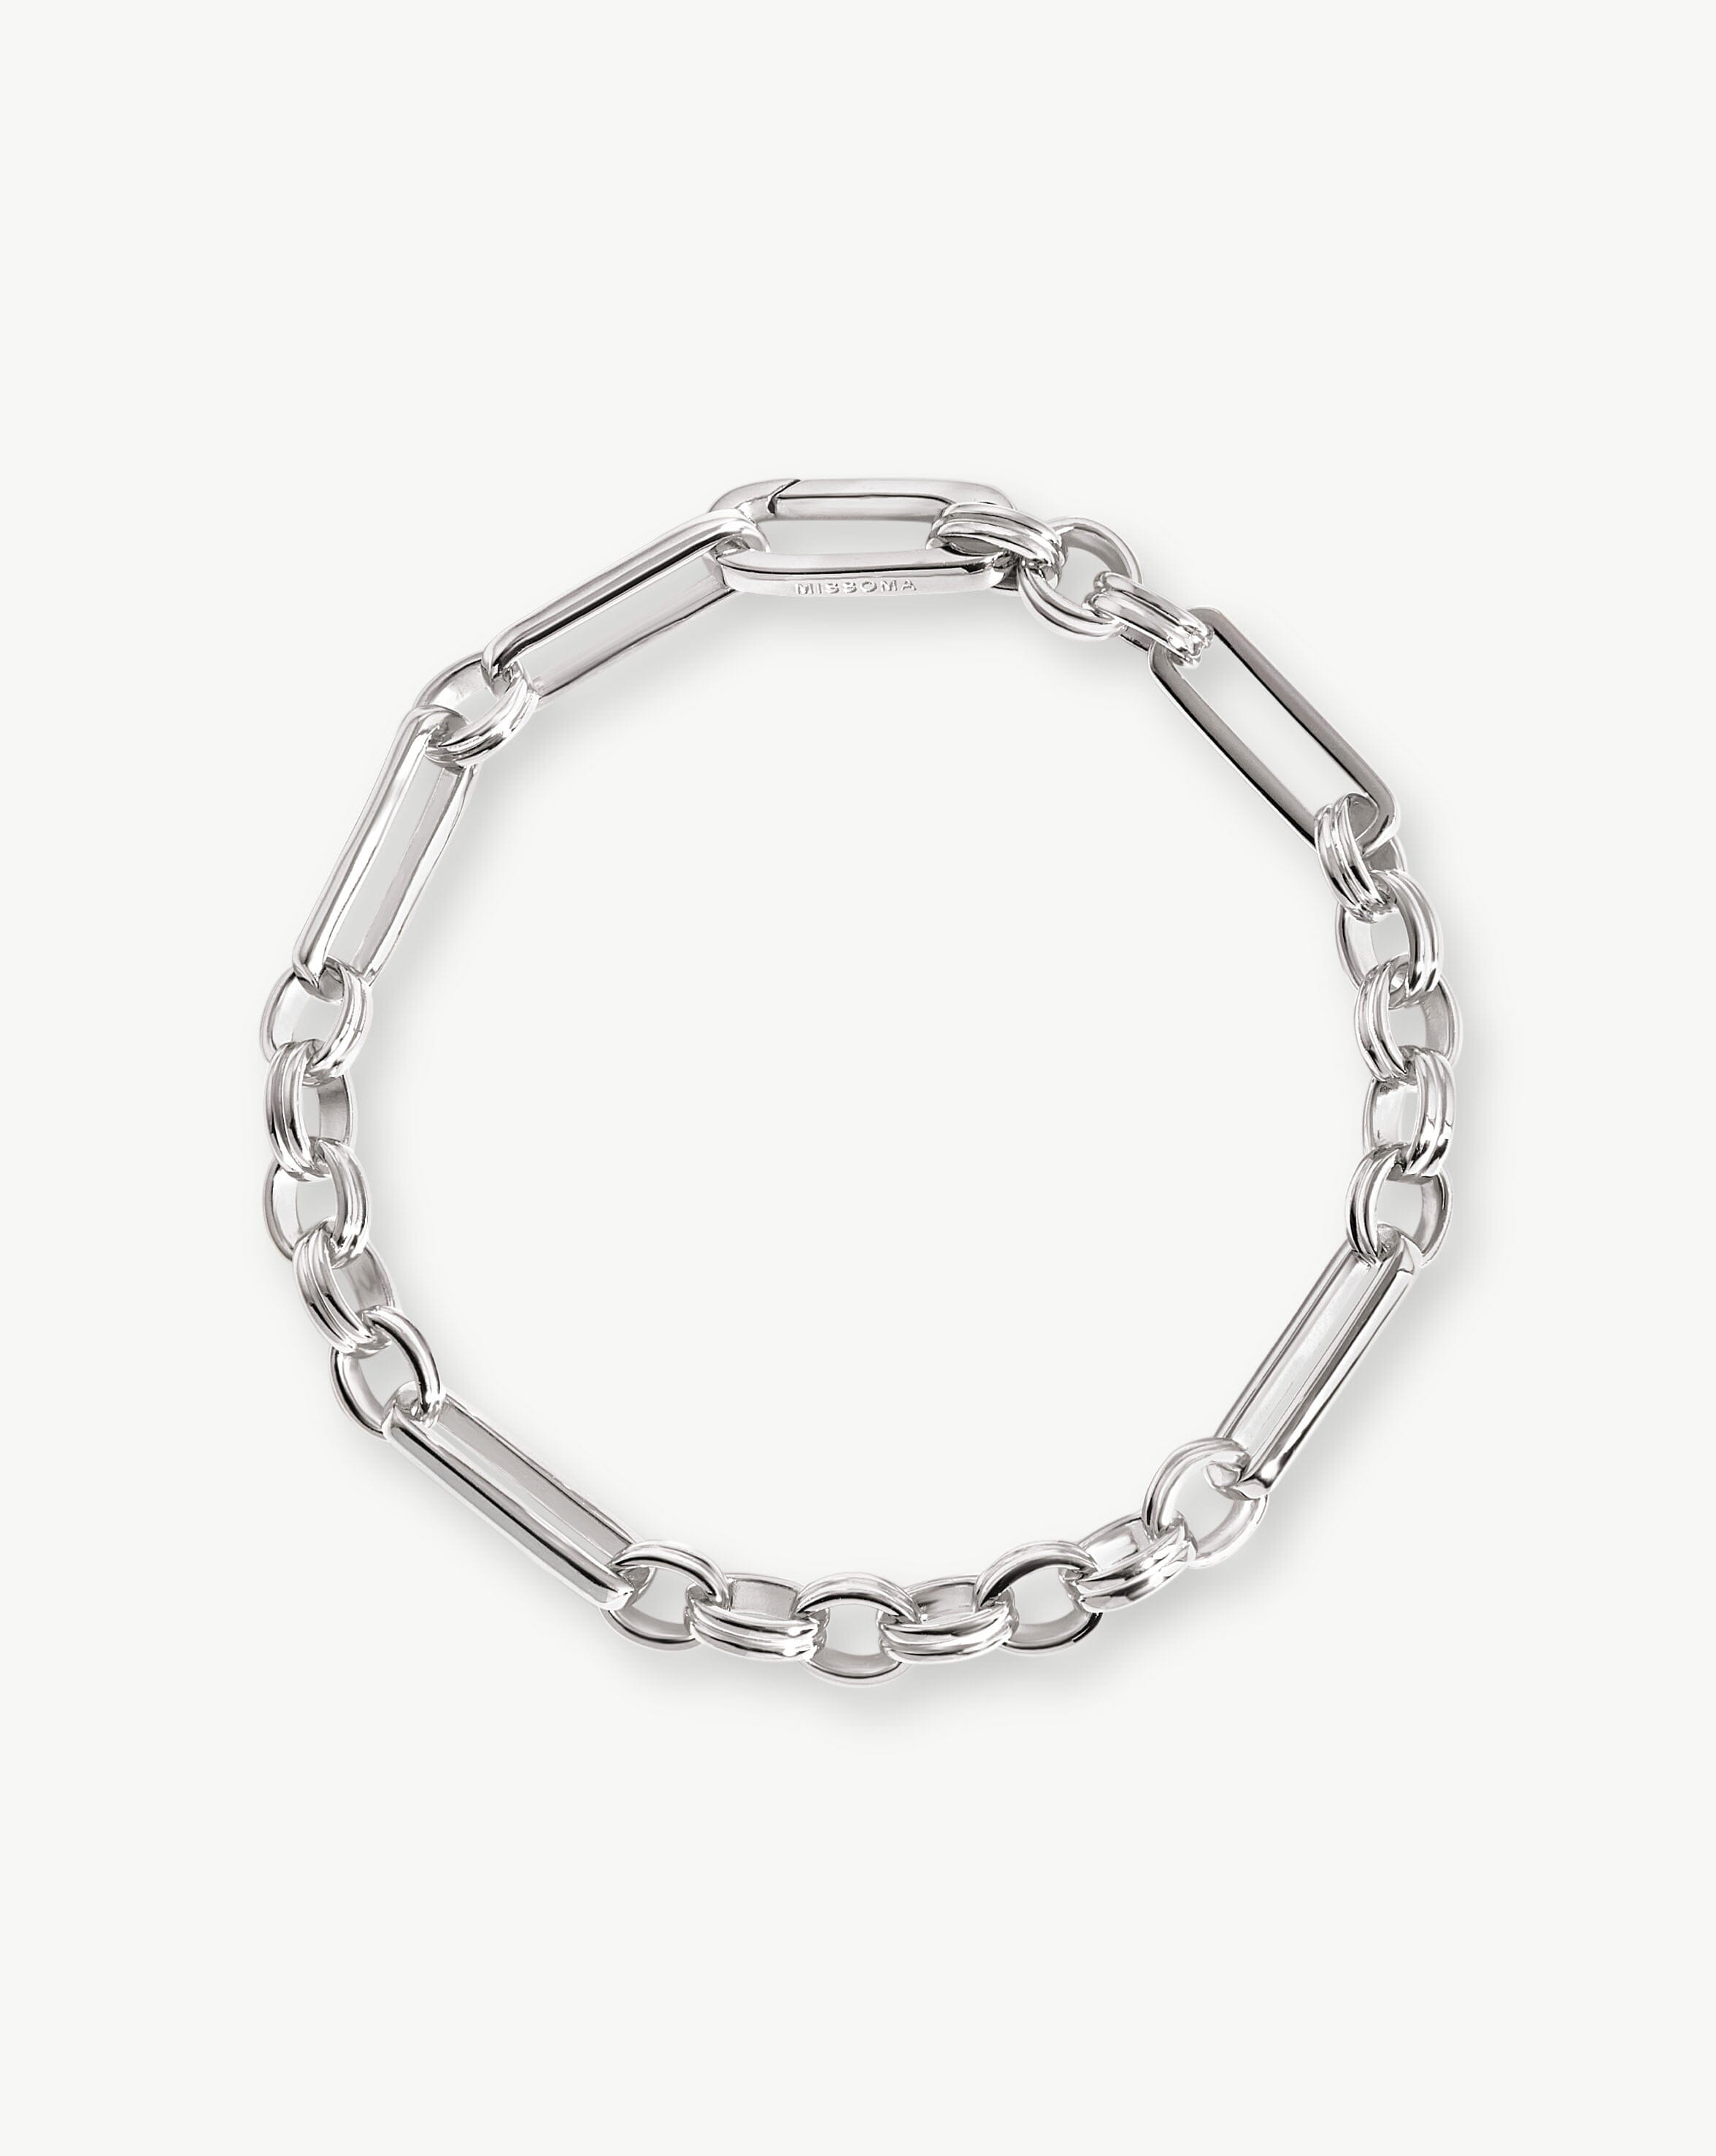 LV Re-Worked Lock Chain Bracelet/Anklet